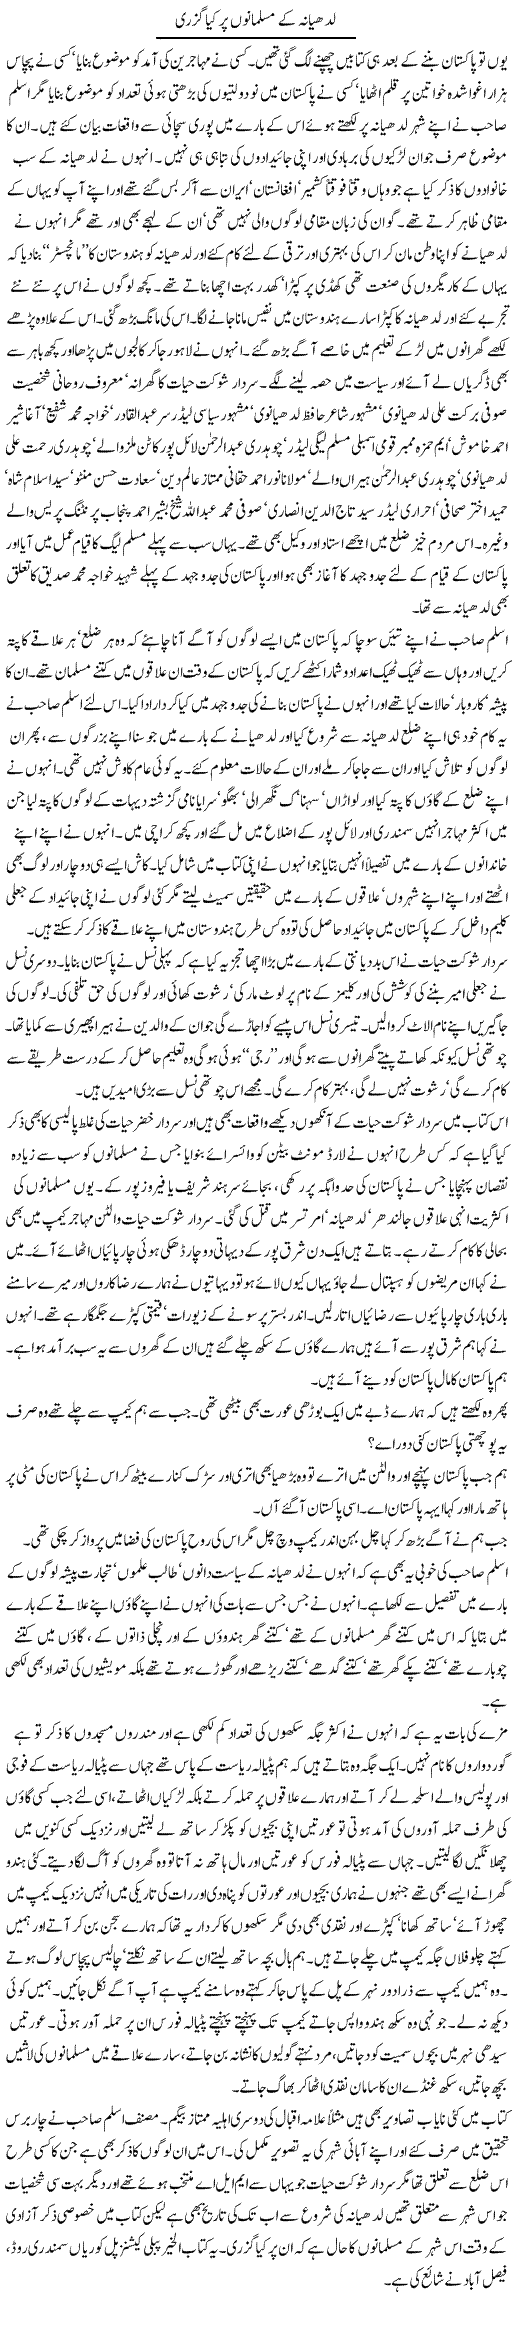 Ludhiana K Musalmano Pe Kia Guzri | Abdul Qadir Hassan | Daily Urdu Columns